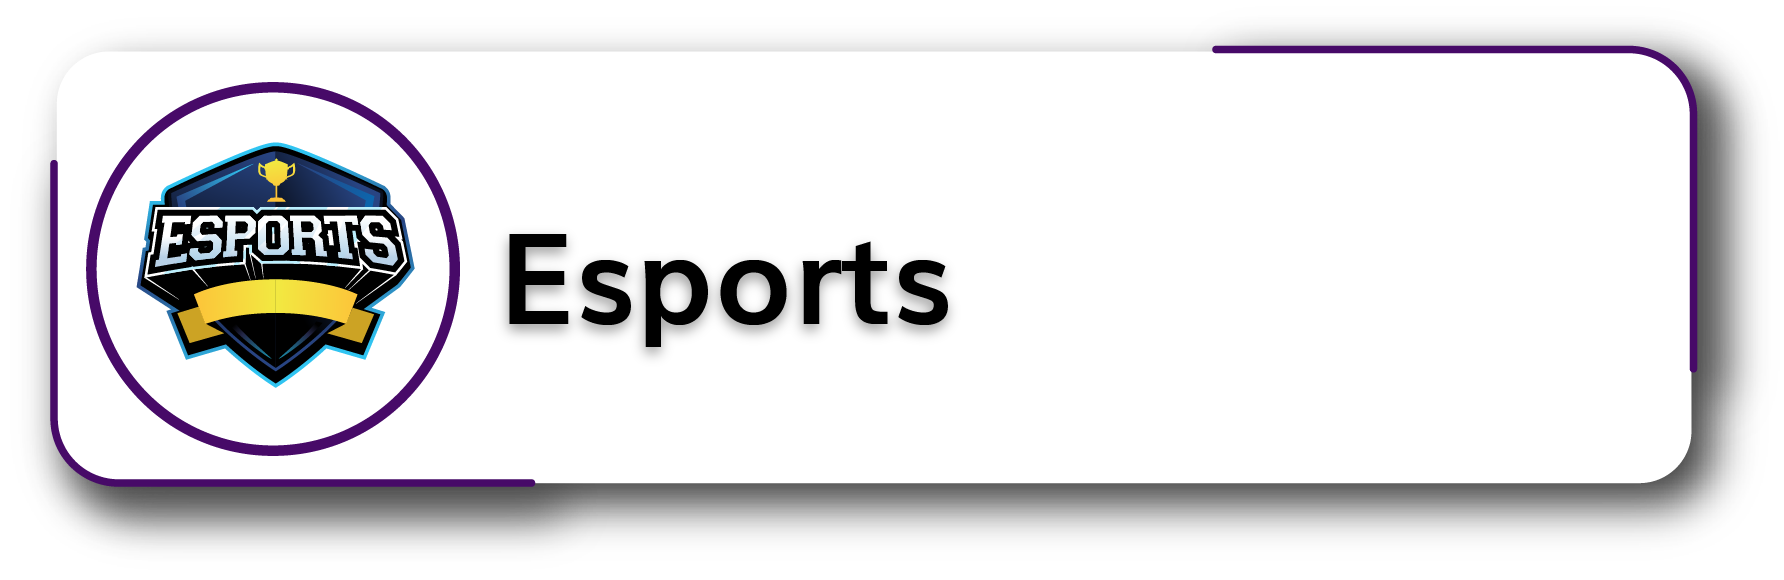 Esports Section Button